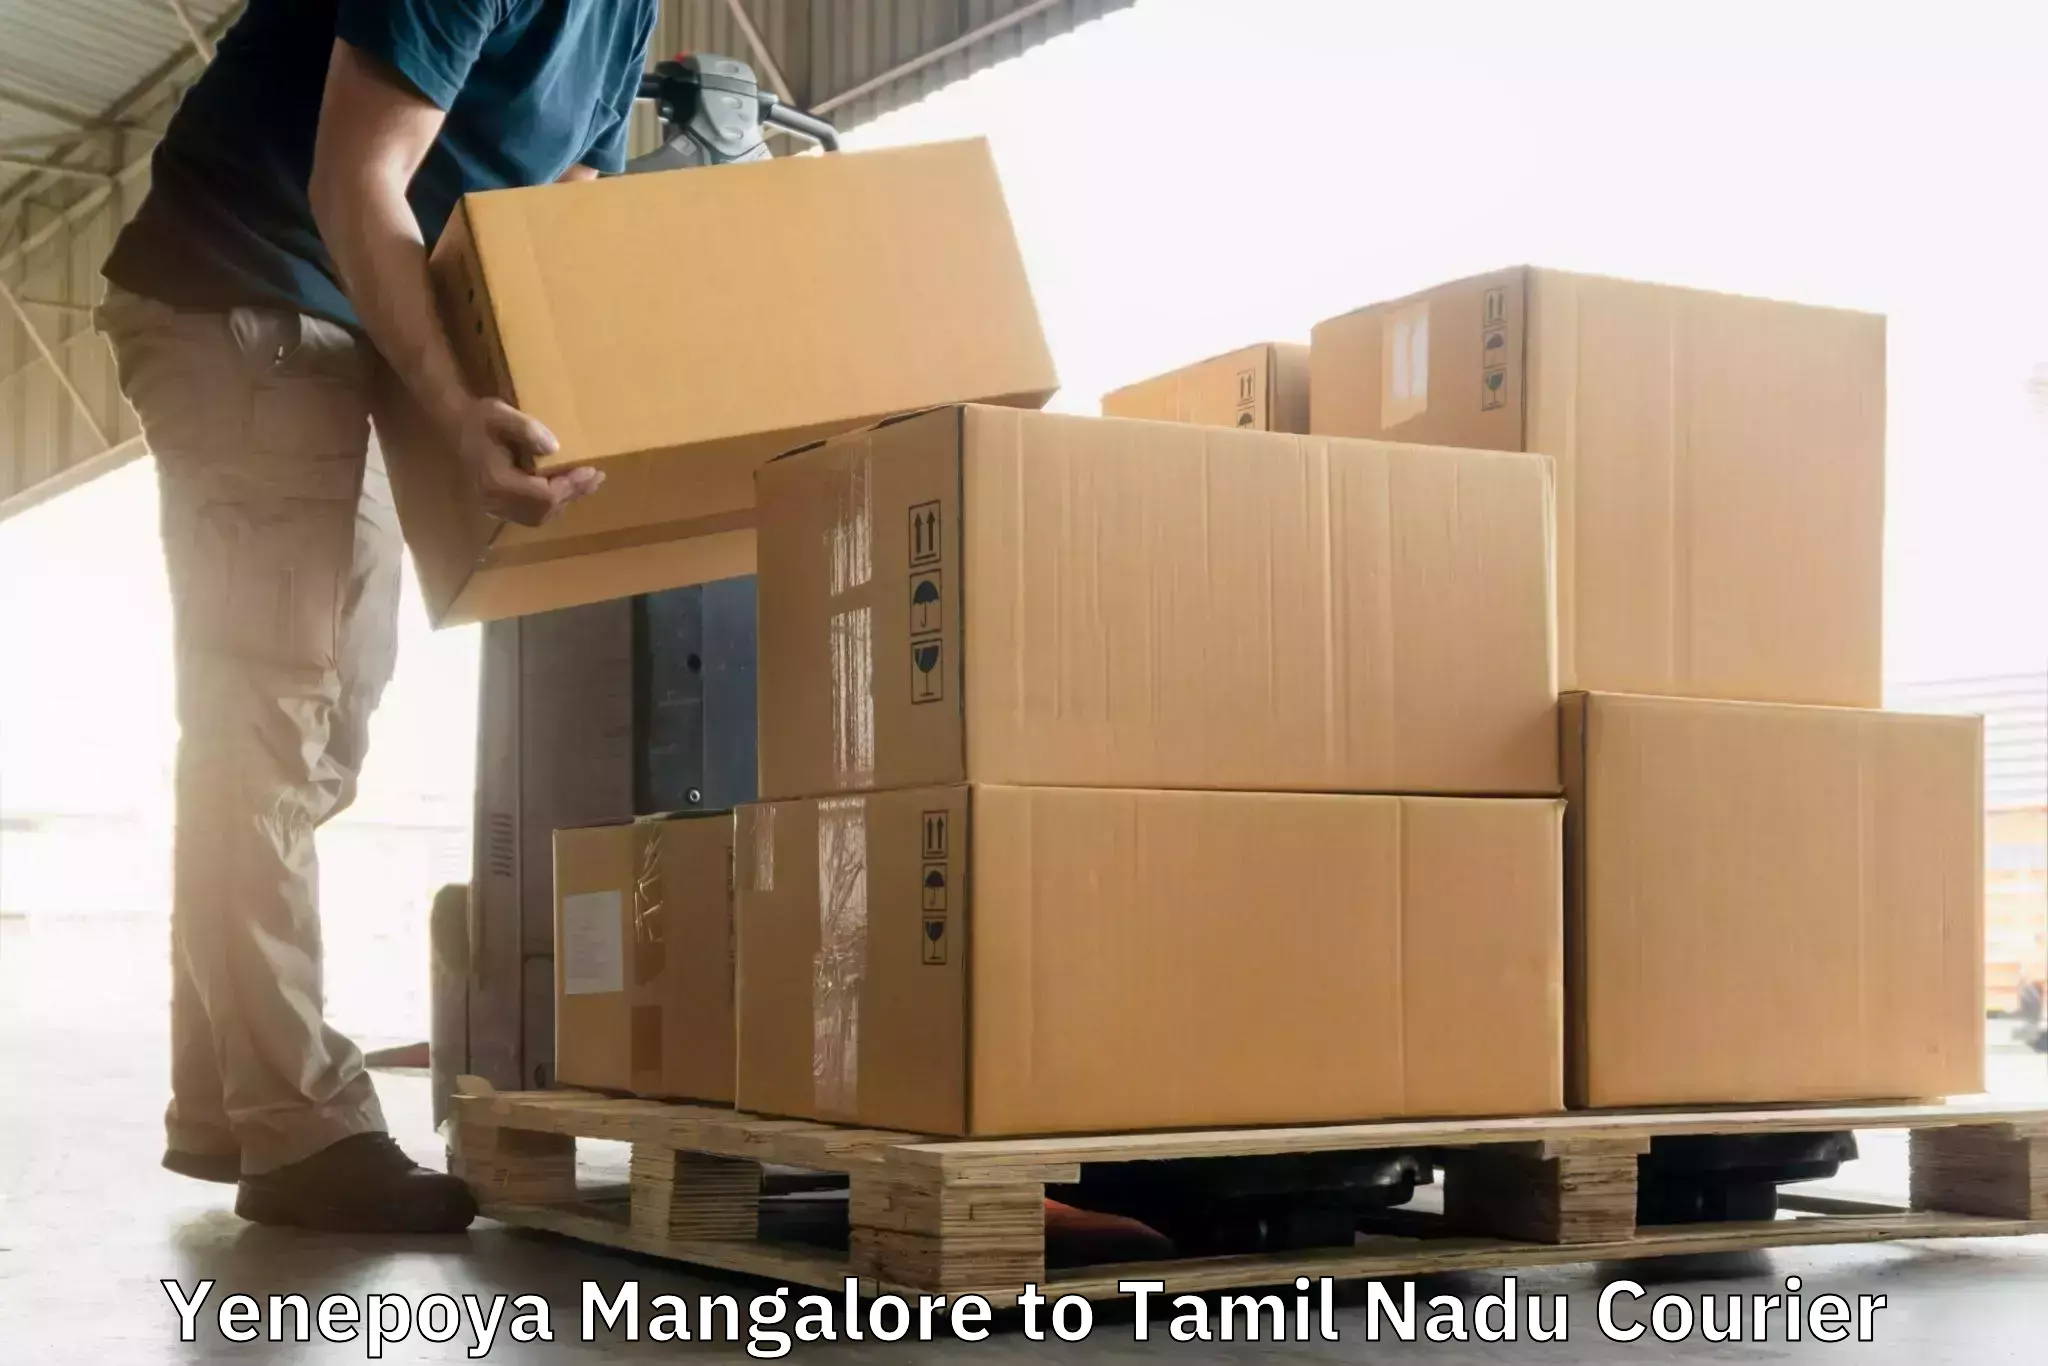 Nationwide delivery network Yenepoya Mangalore to Tamil Nadu